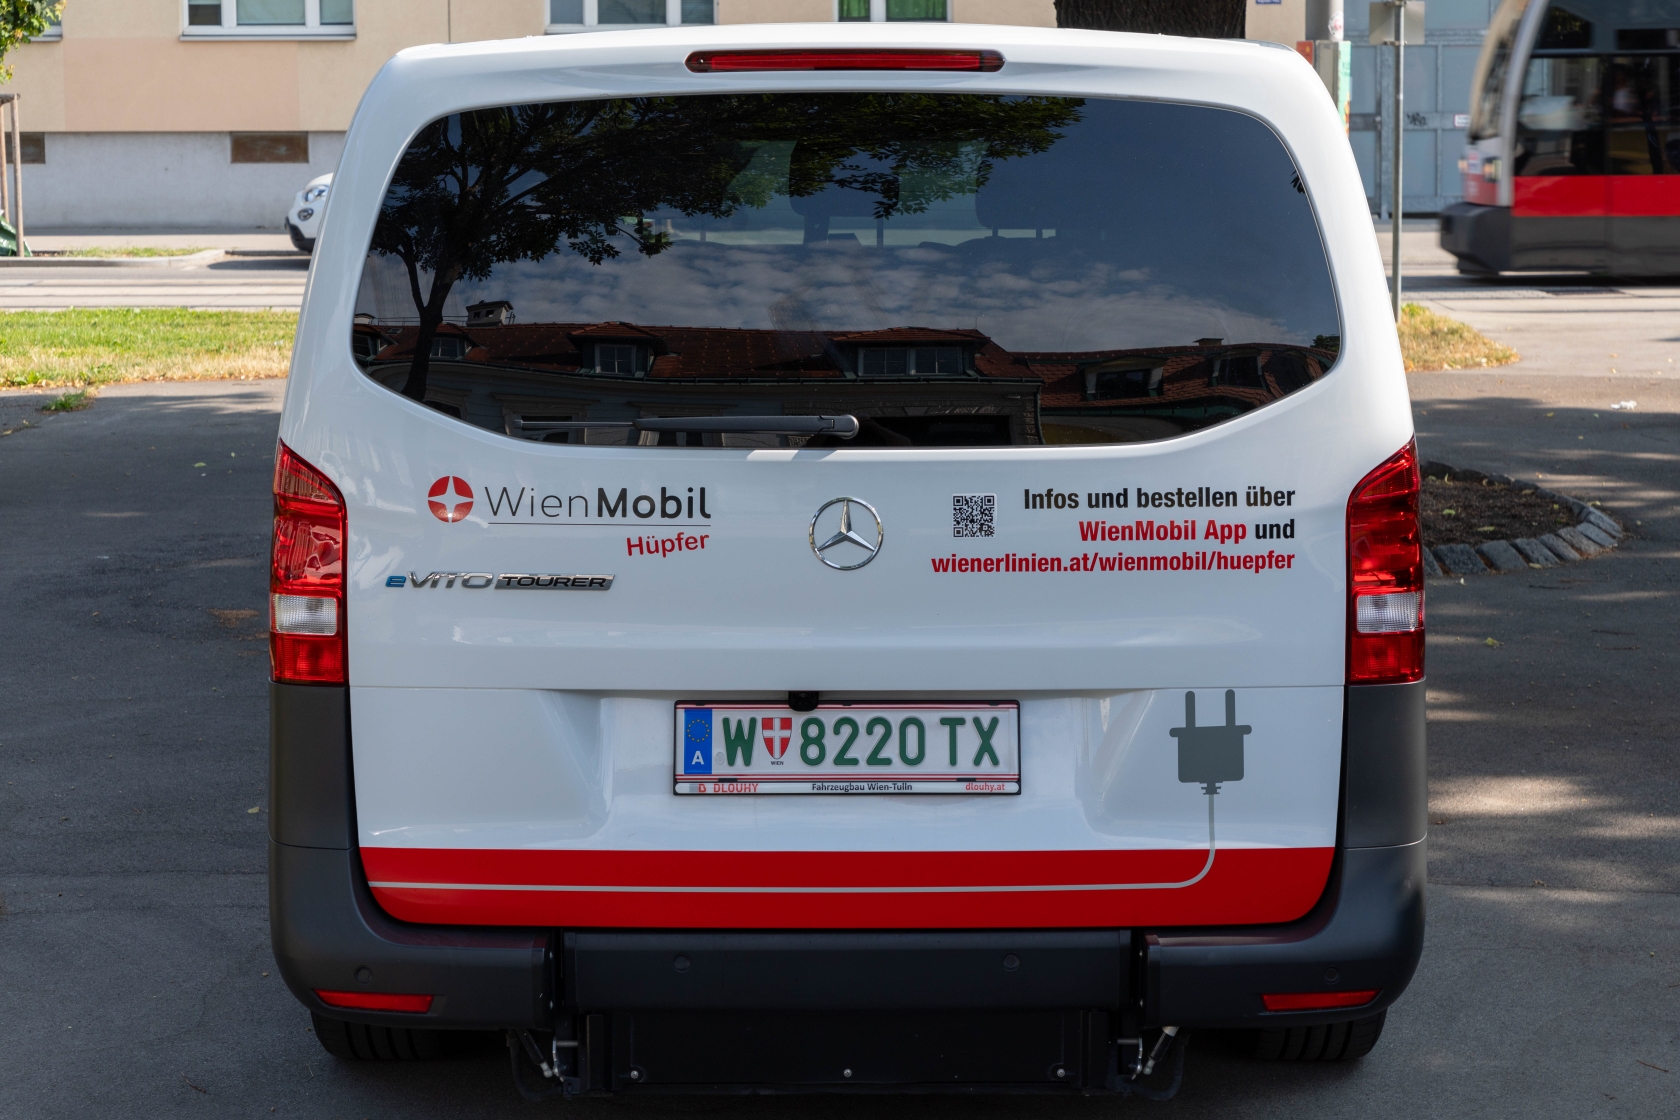 WienMobil verbindet das klassische Öffi-Angebot mit flexiblen Mobilitätslösungen in Wien